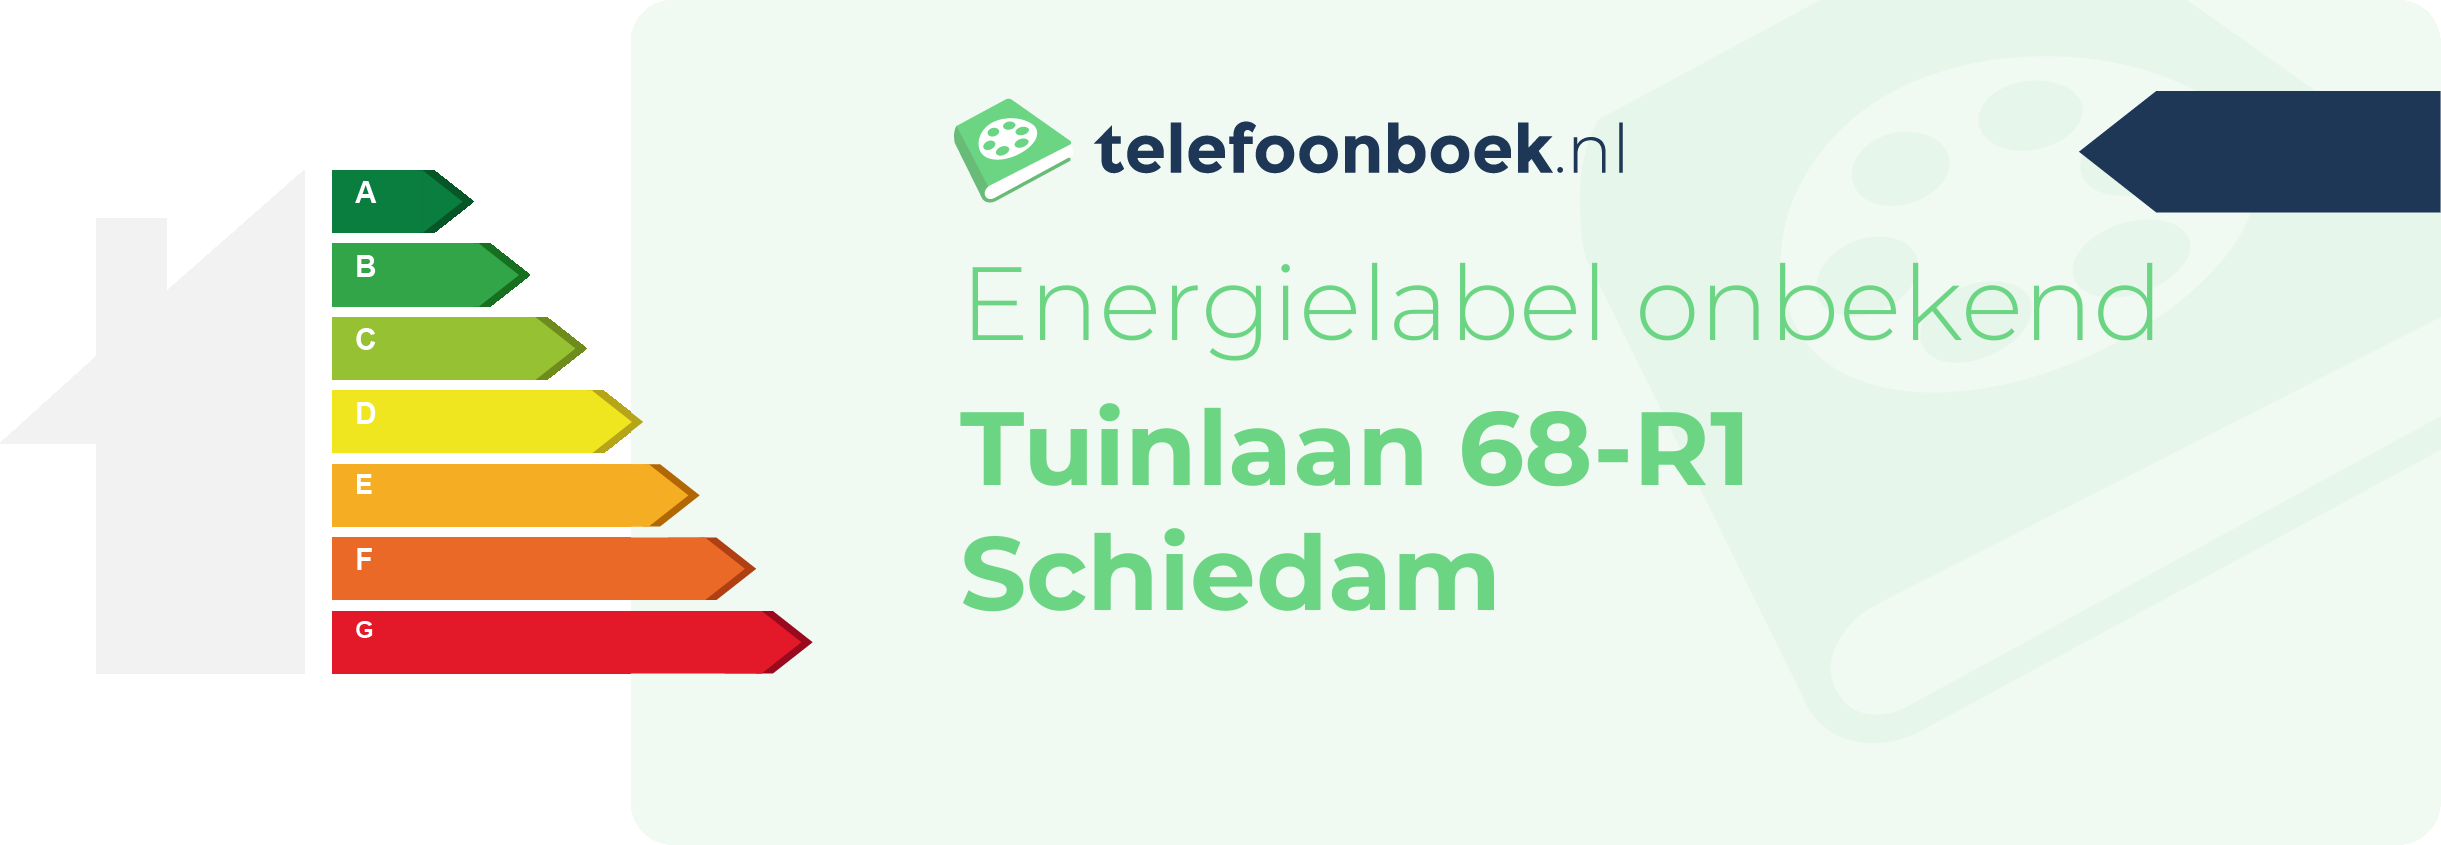 Energielabel Tuinlaan 68-R1 Schiedam